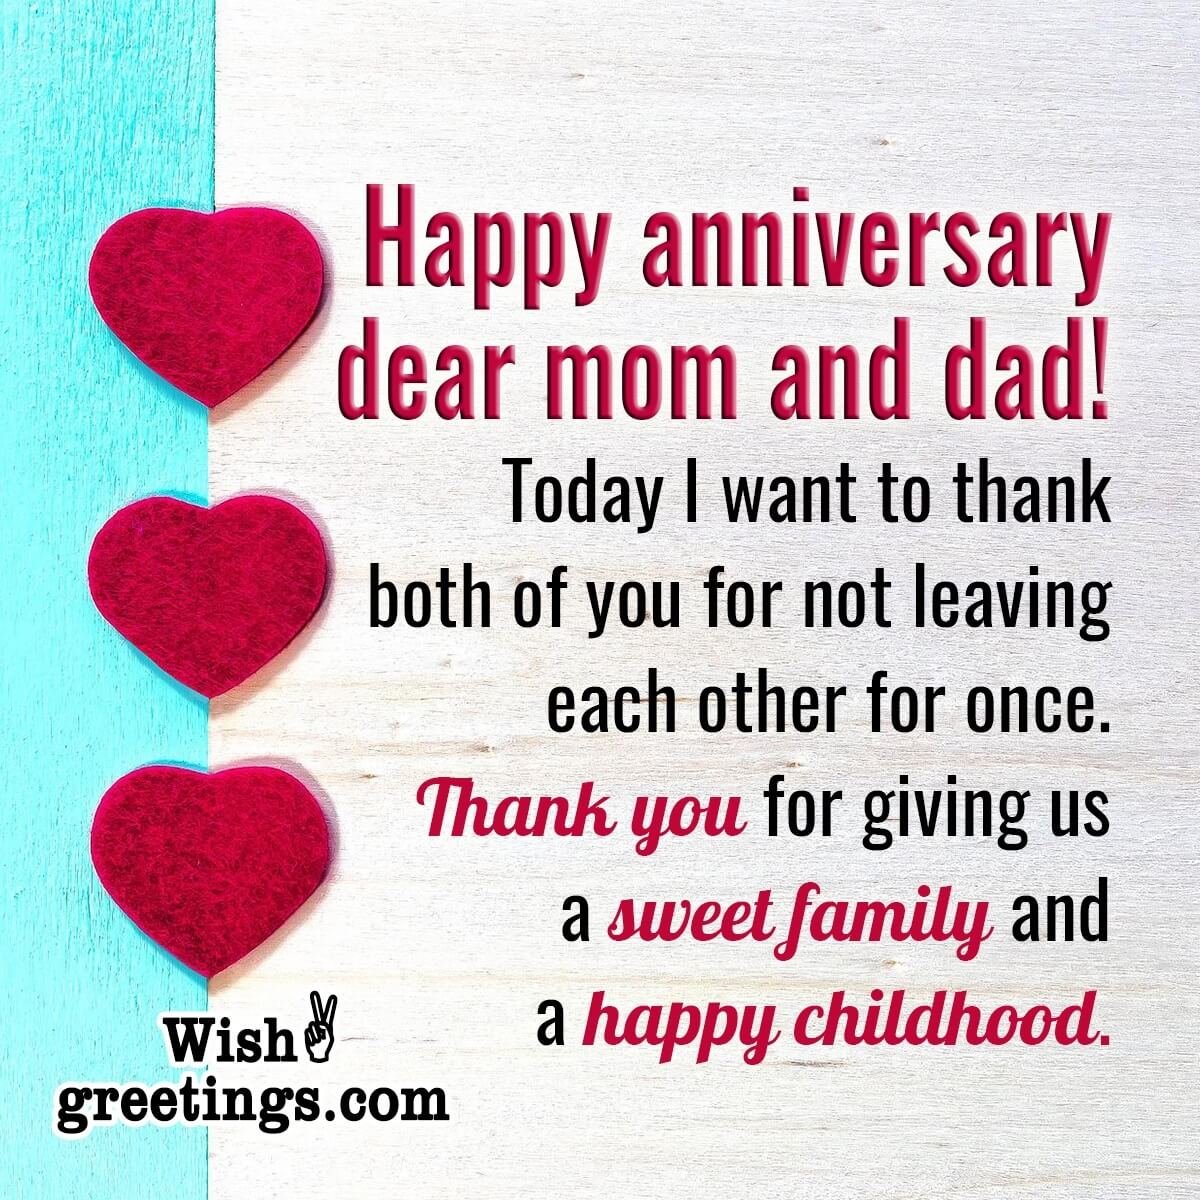 Happy Anniversary Dear Mom And Dad!